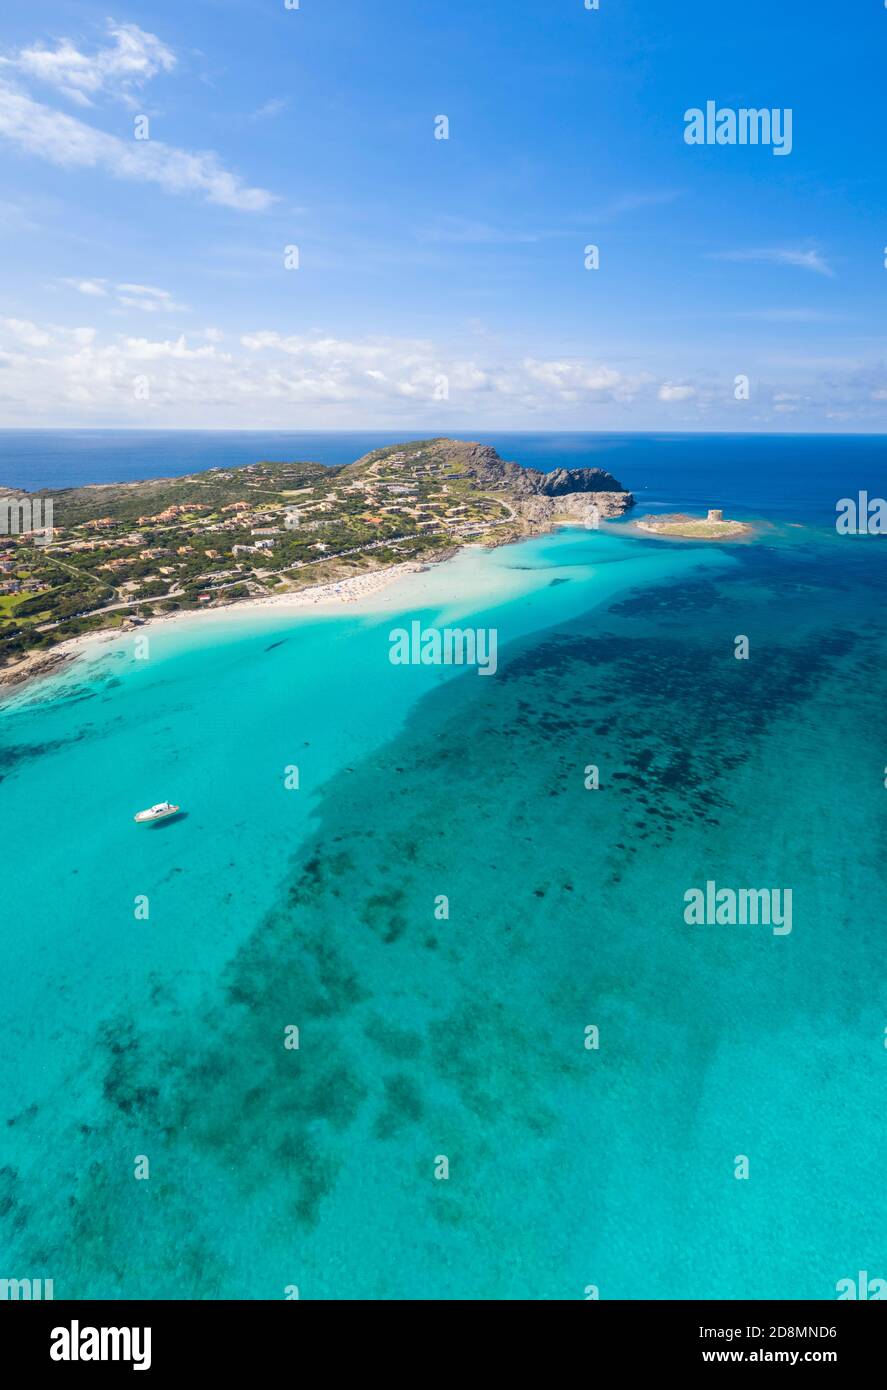 Vue aérienne de Stintino avec la Pelosa et la plage de la Pelosetta et Capo Falcone. Stintino, Golfe d'Asinara, Sassari, Sardaigne, Italie. Banque D'Images